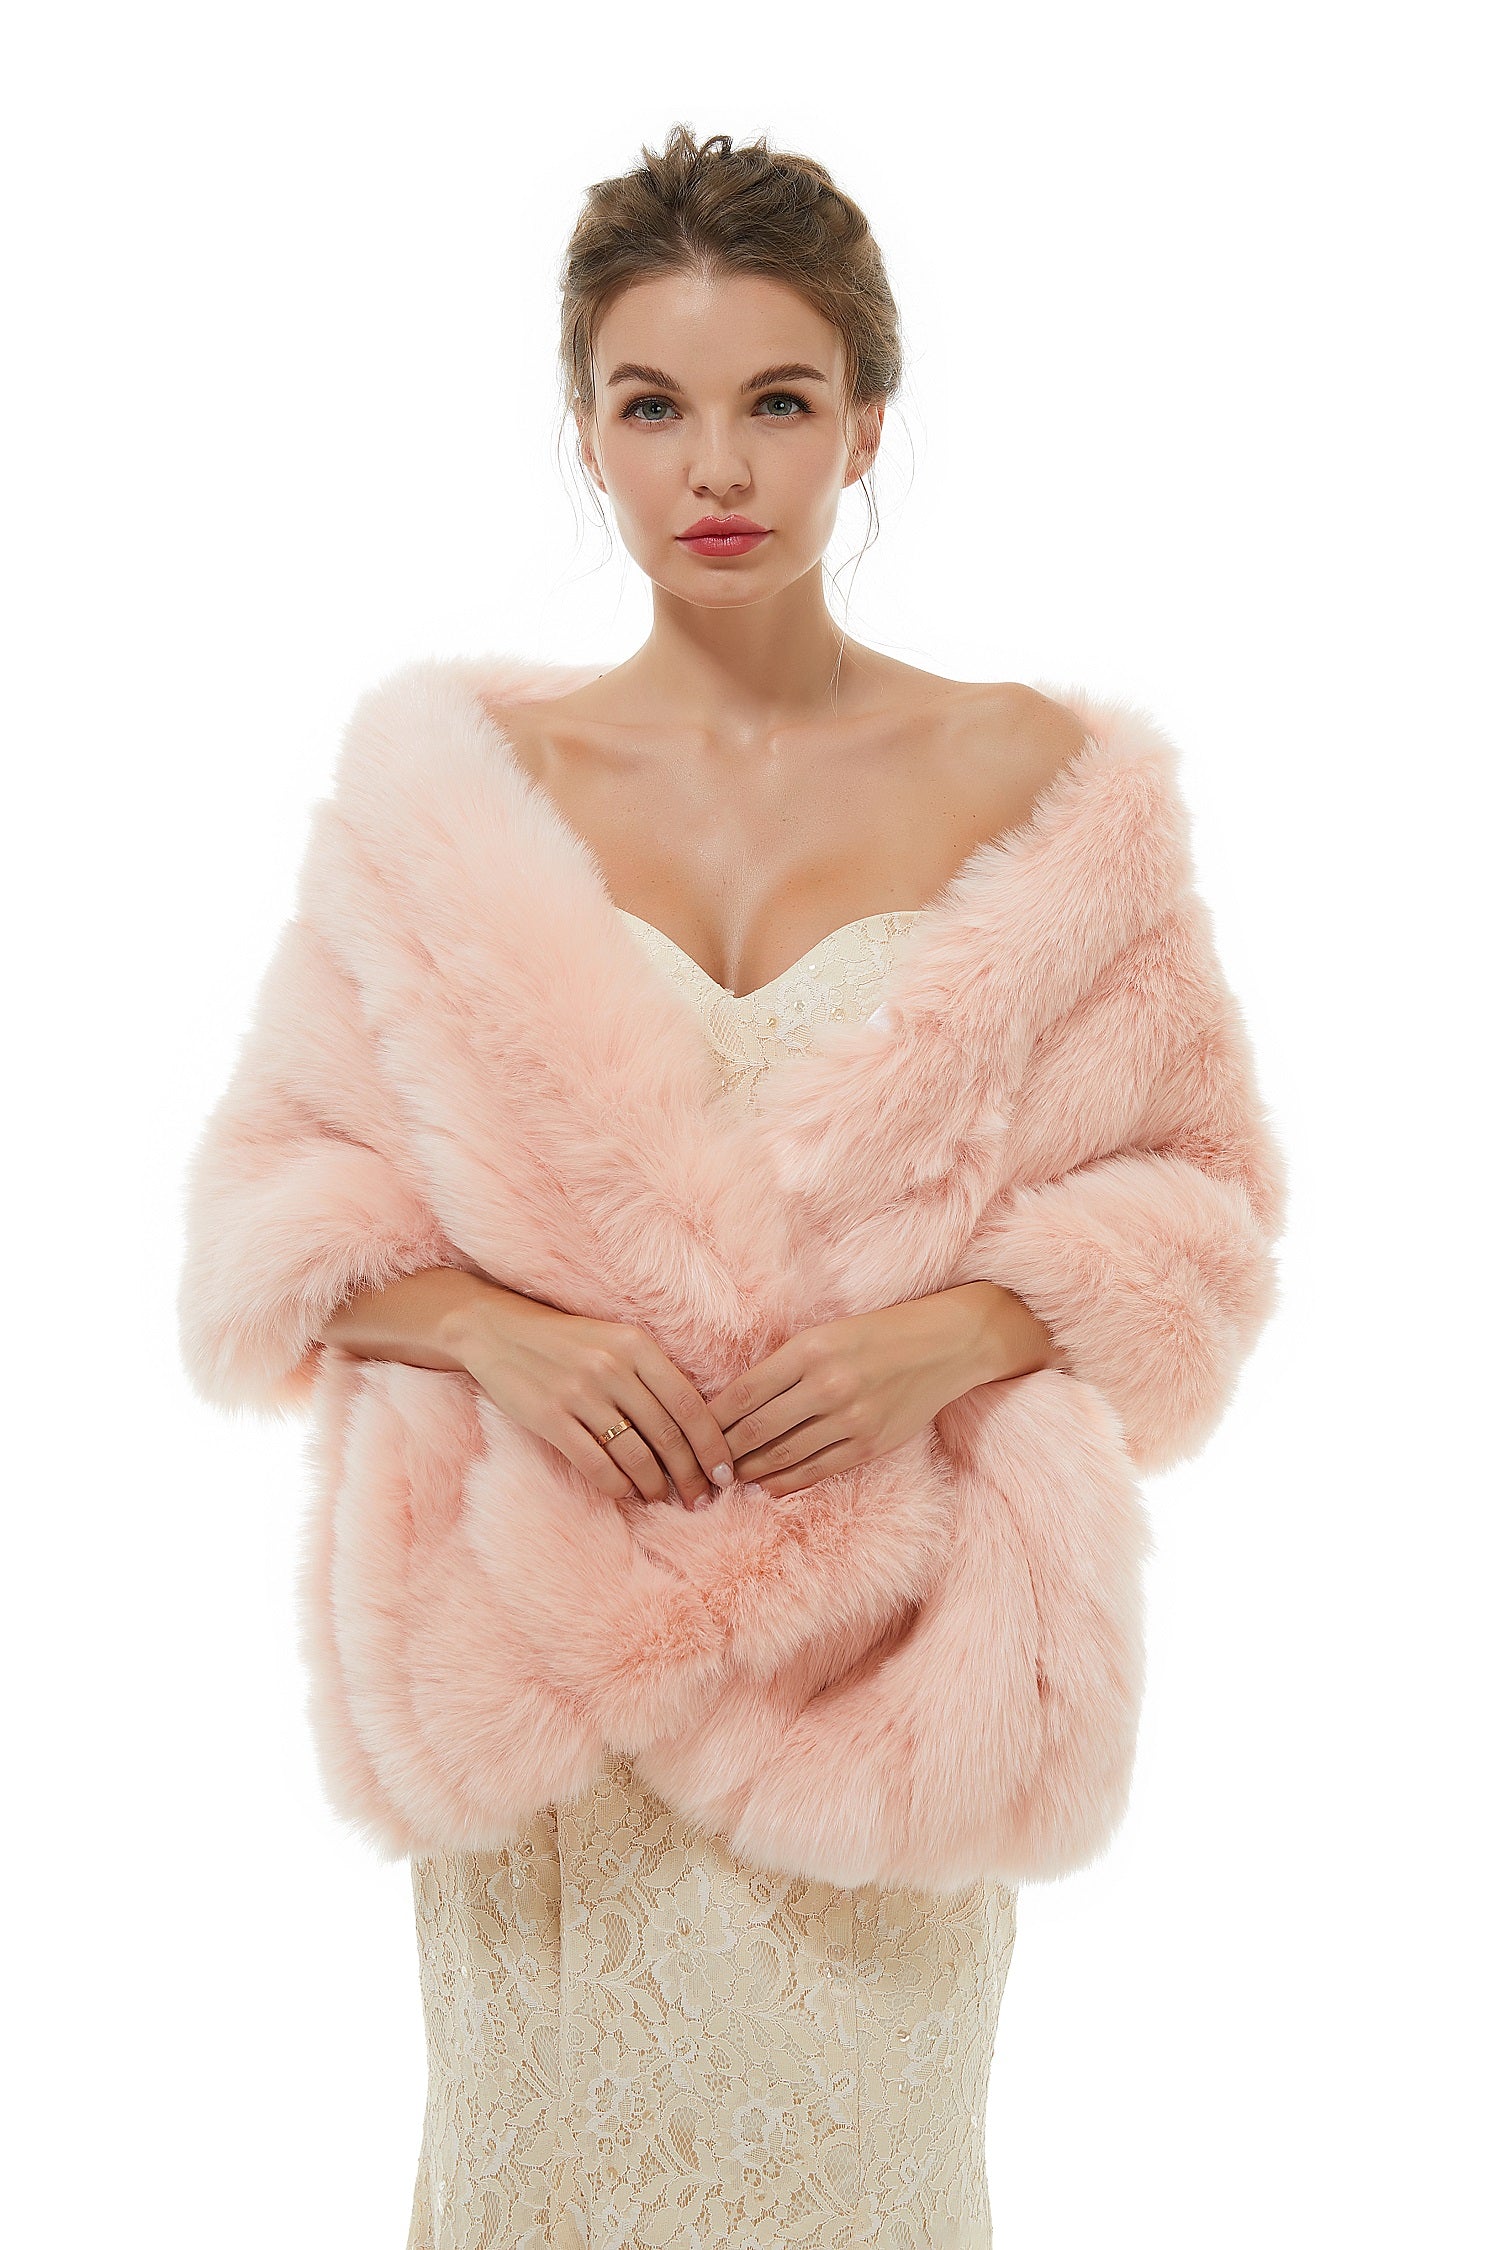 Dresseswow Faux Fur Wedding Wrap for Winter